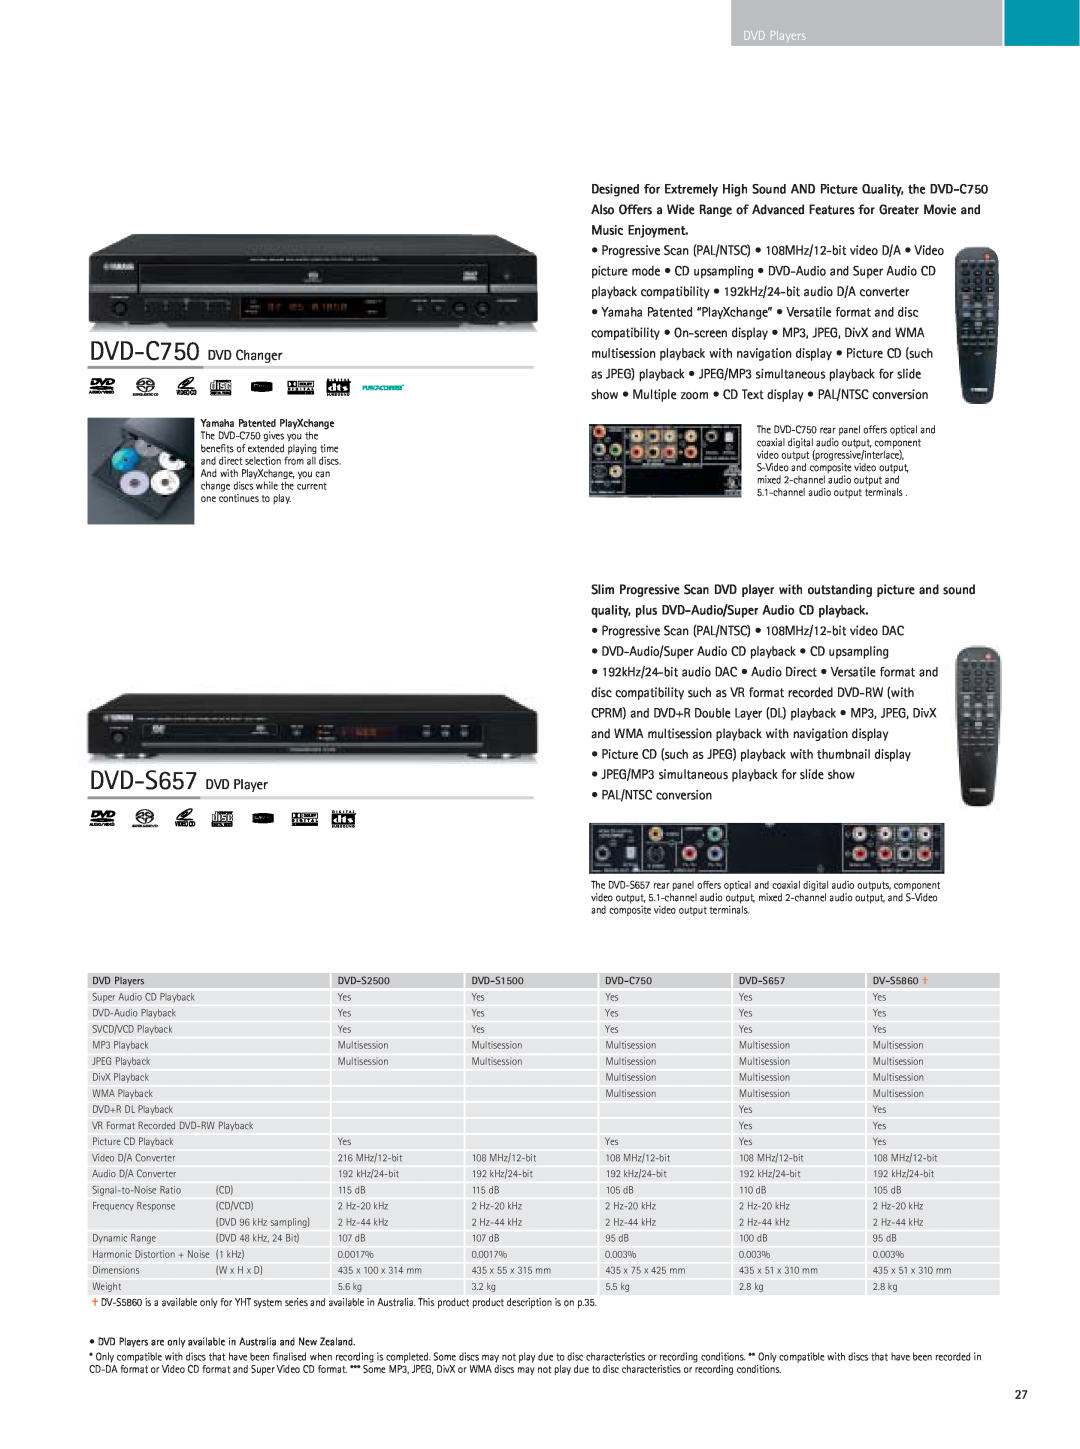 Yamaha RX-Z9 manual DVD-C750 DVD Changer, DVD Players, quality, plus DVD-Audio/SuperAudio CD playback 